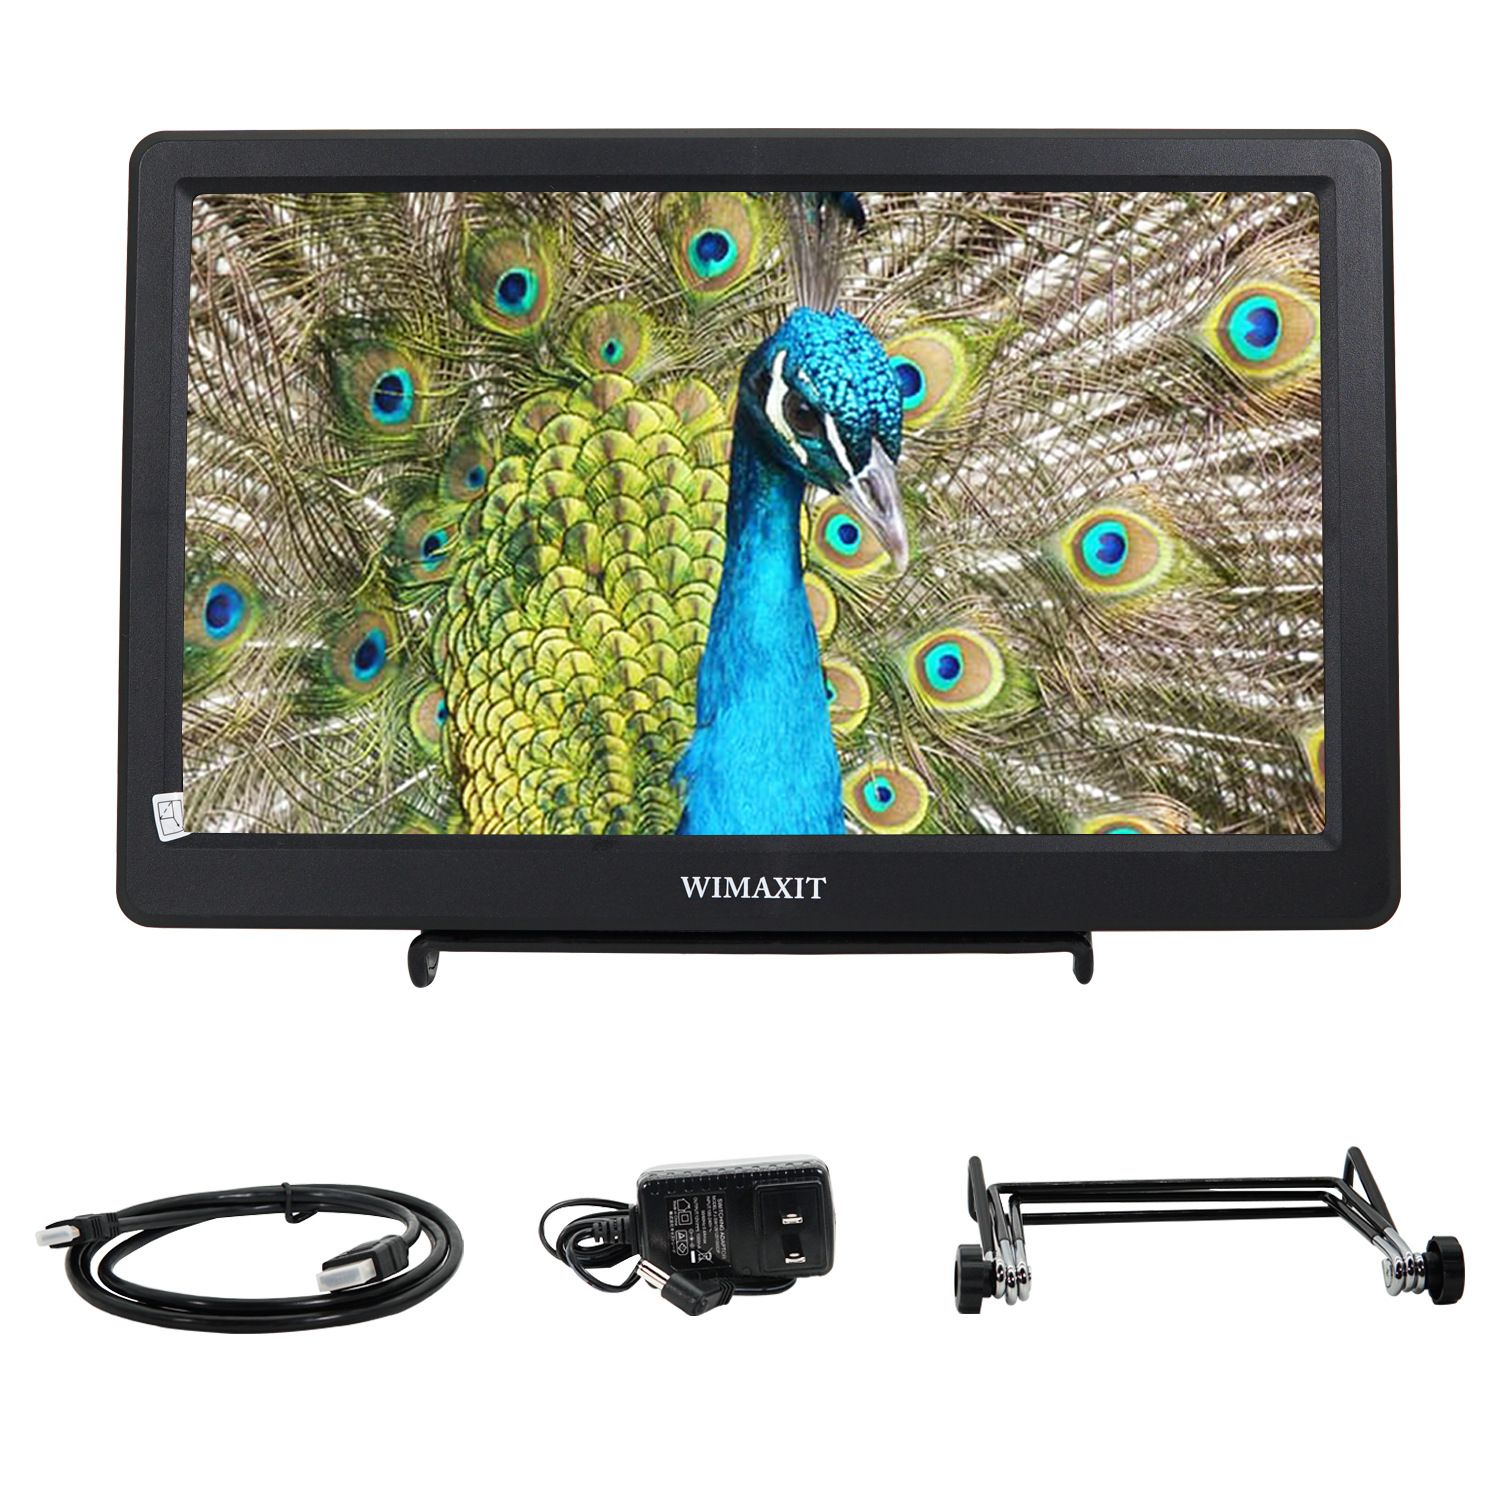 WIMAXIT-M1020-G-1080P-HD-101-Inch-169-Touch-Screen-Portable-Mini-TV-Display-Screen-HDMI-VGA-Monitor--1543397